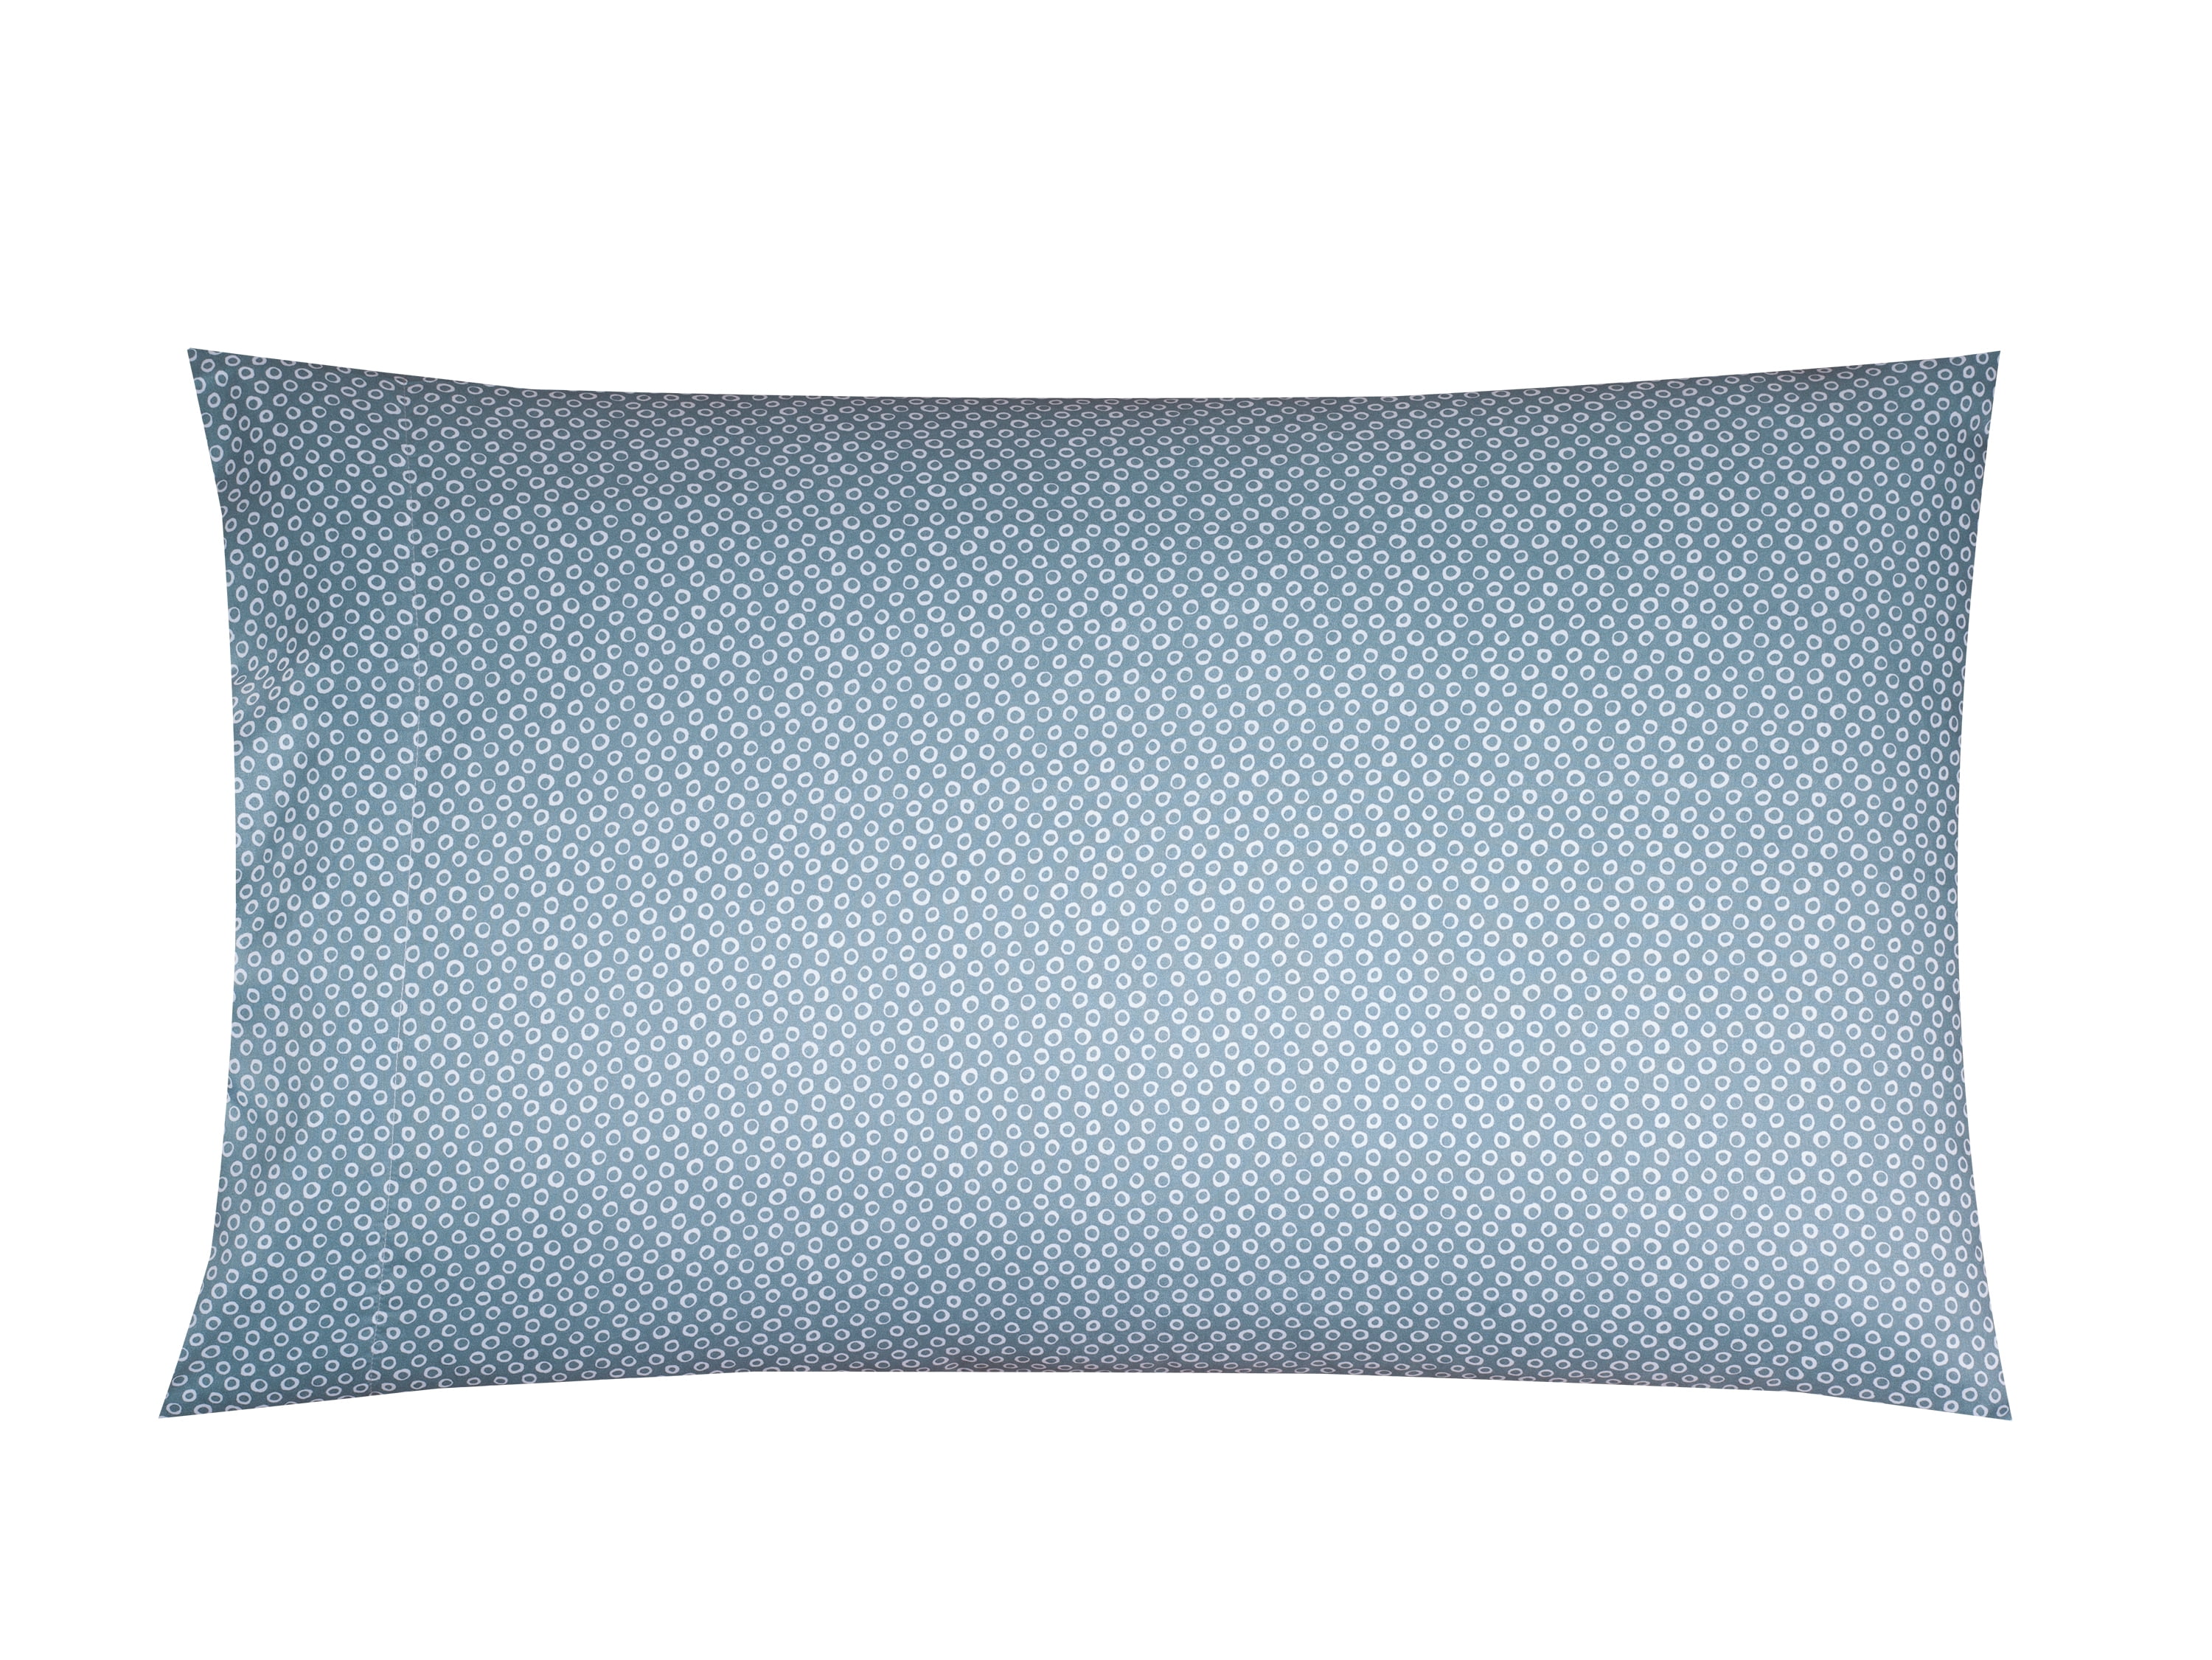 Single/Sets 100% Egyptian Cotton Printed V Shape Pillow Cases Ideal For Nursing 